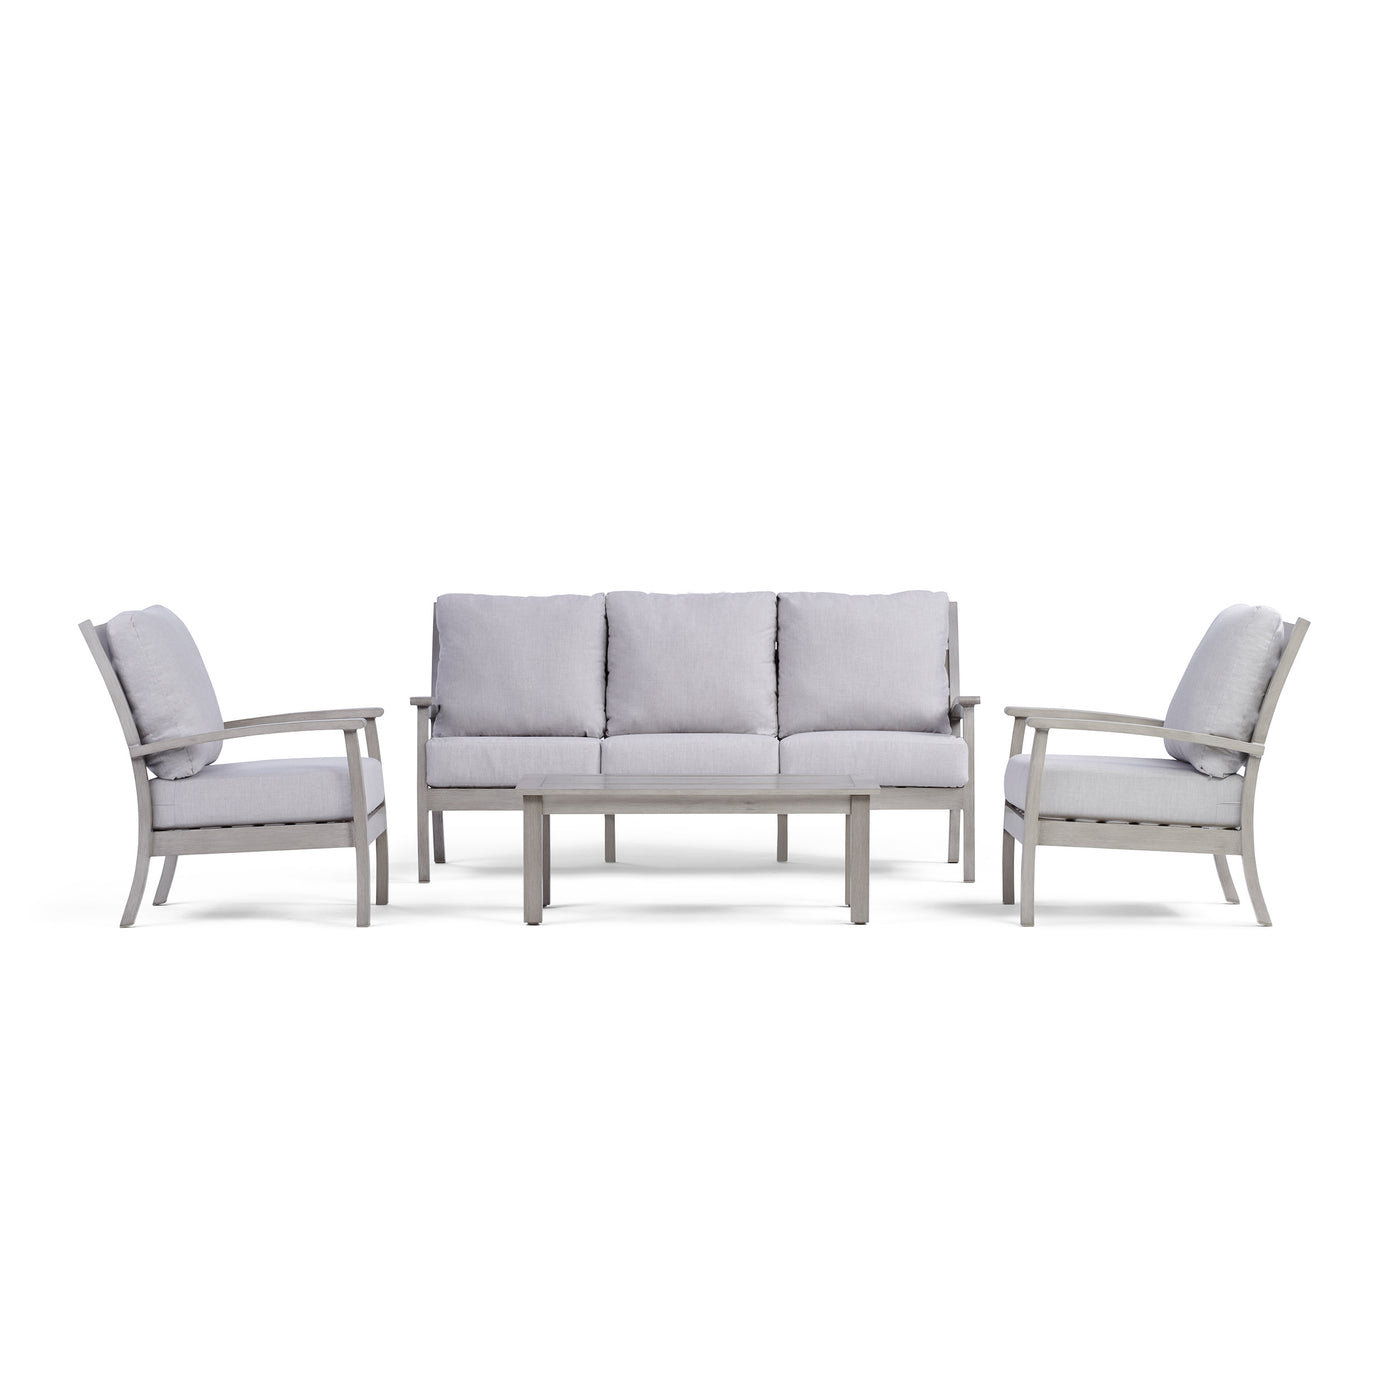  Yardbird Eden Outdoor Sofa Set with Fixed Chairs Outdoor Furniture